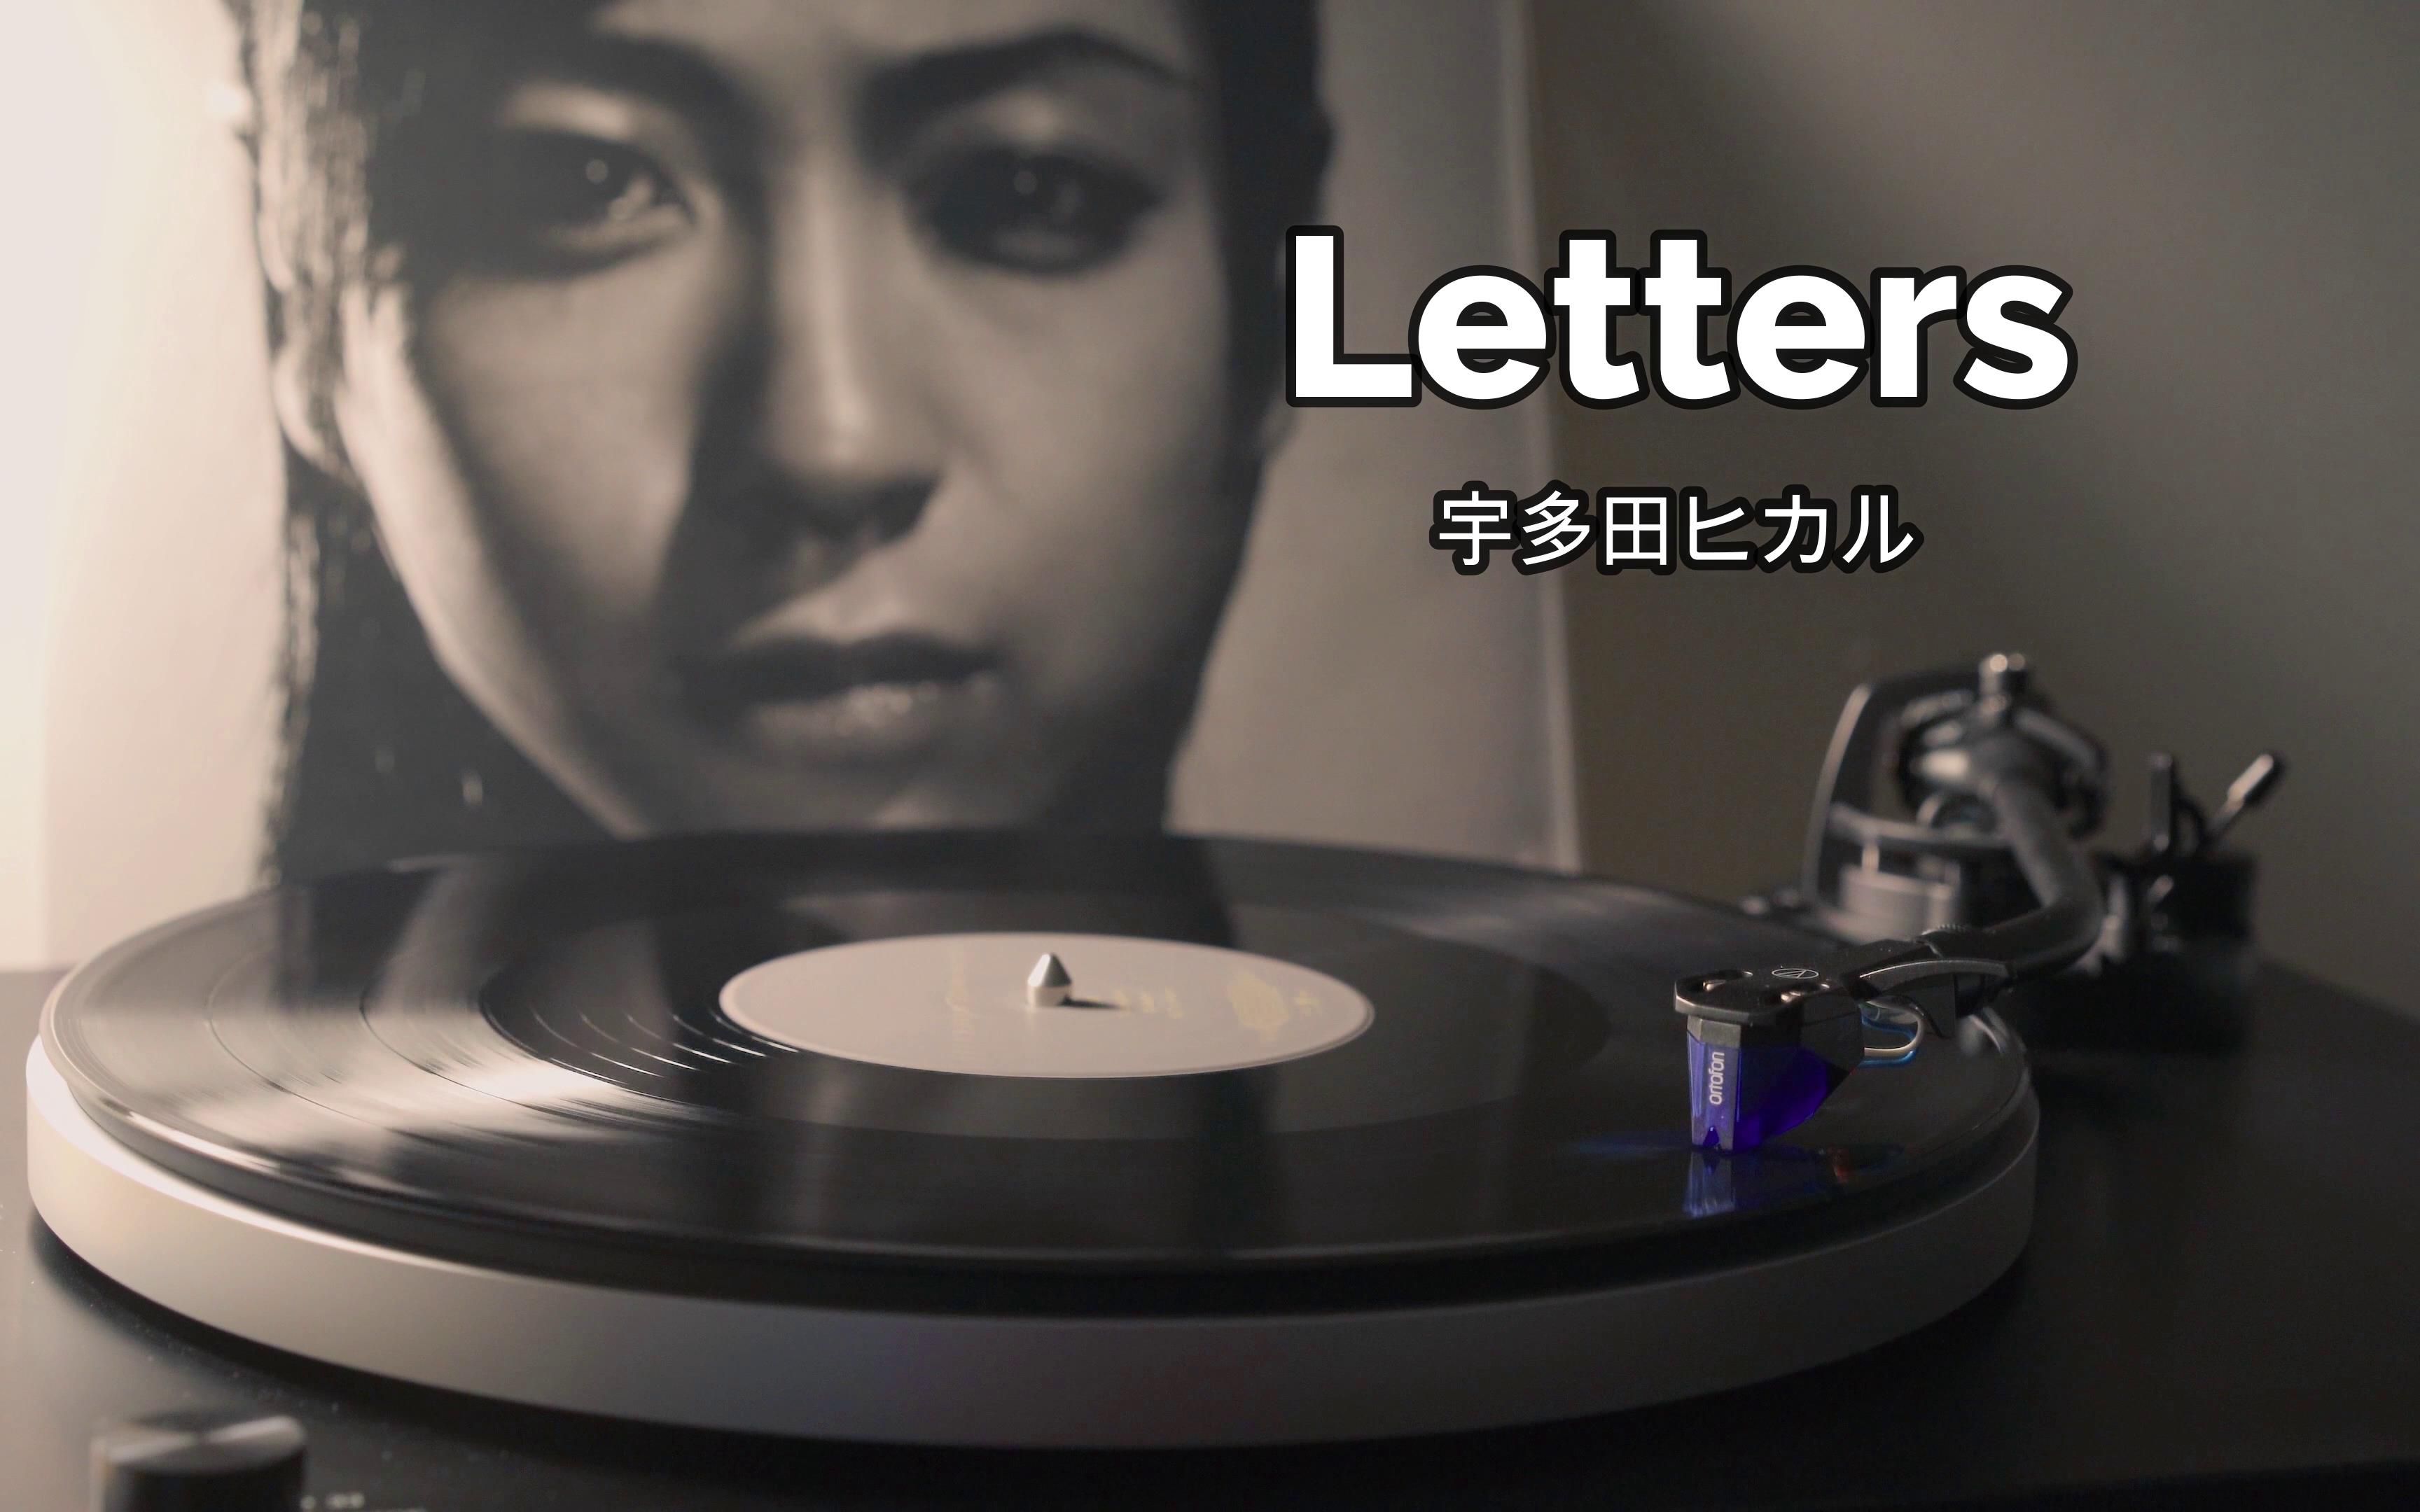 【4K】宇多田光《Letters》高音质黑胶唱片试听